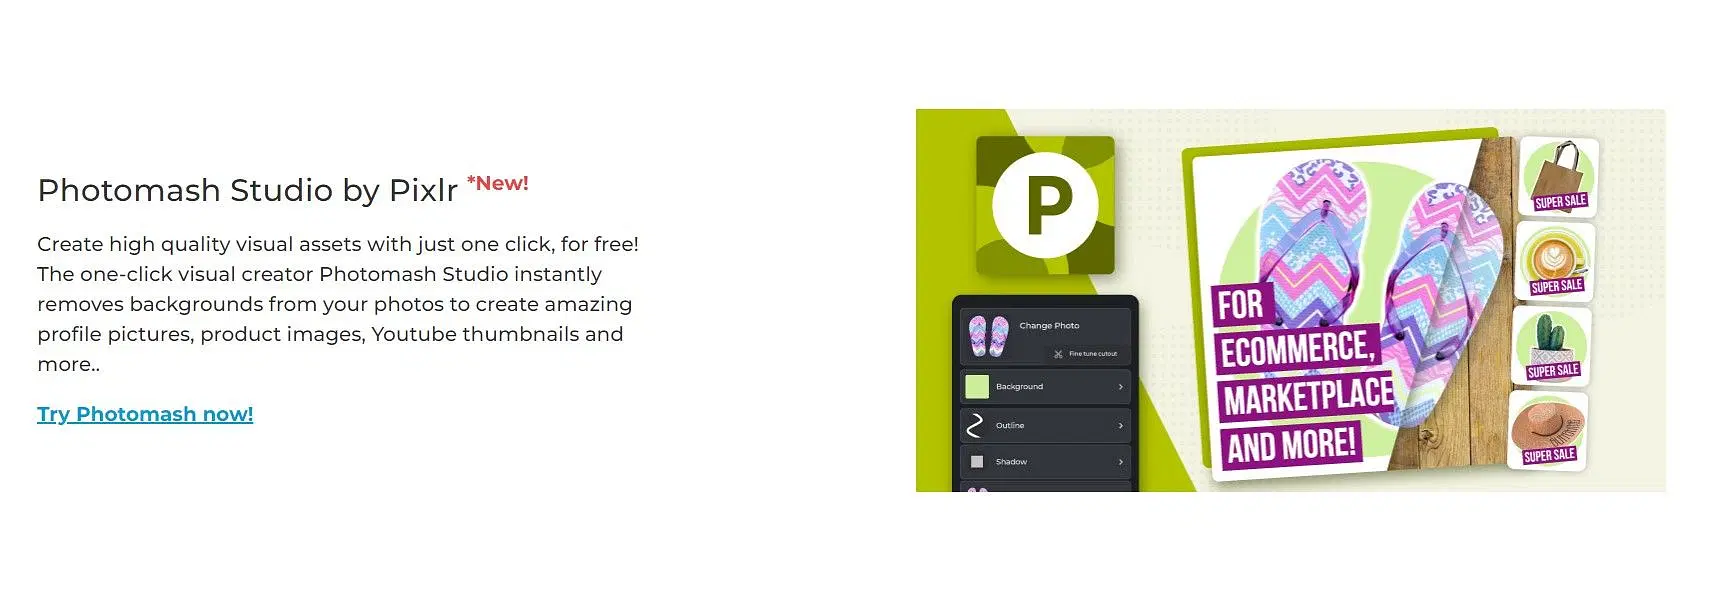 Pixlr Premium for FREE!!! – MuseNews